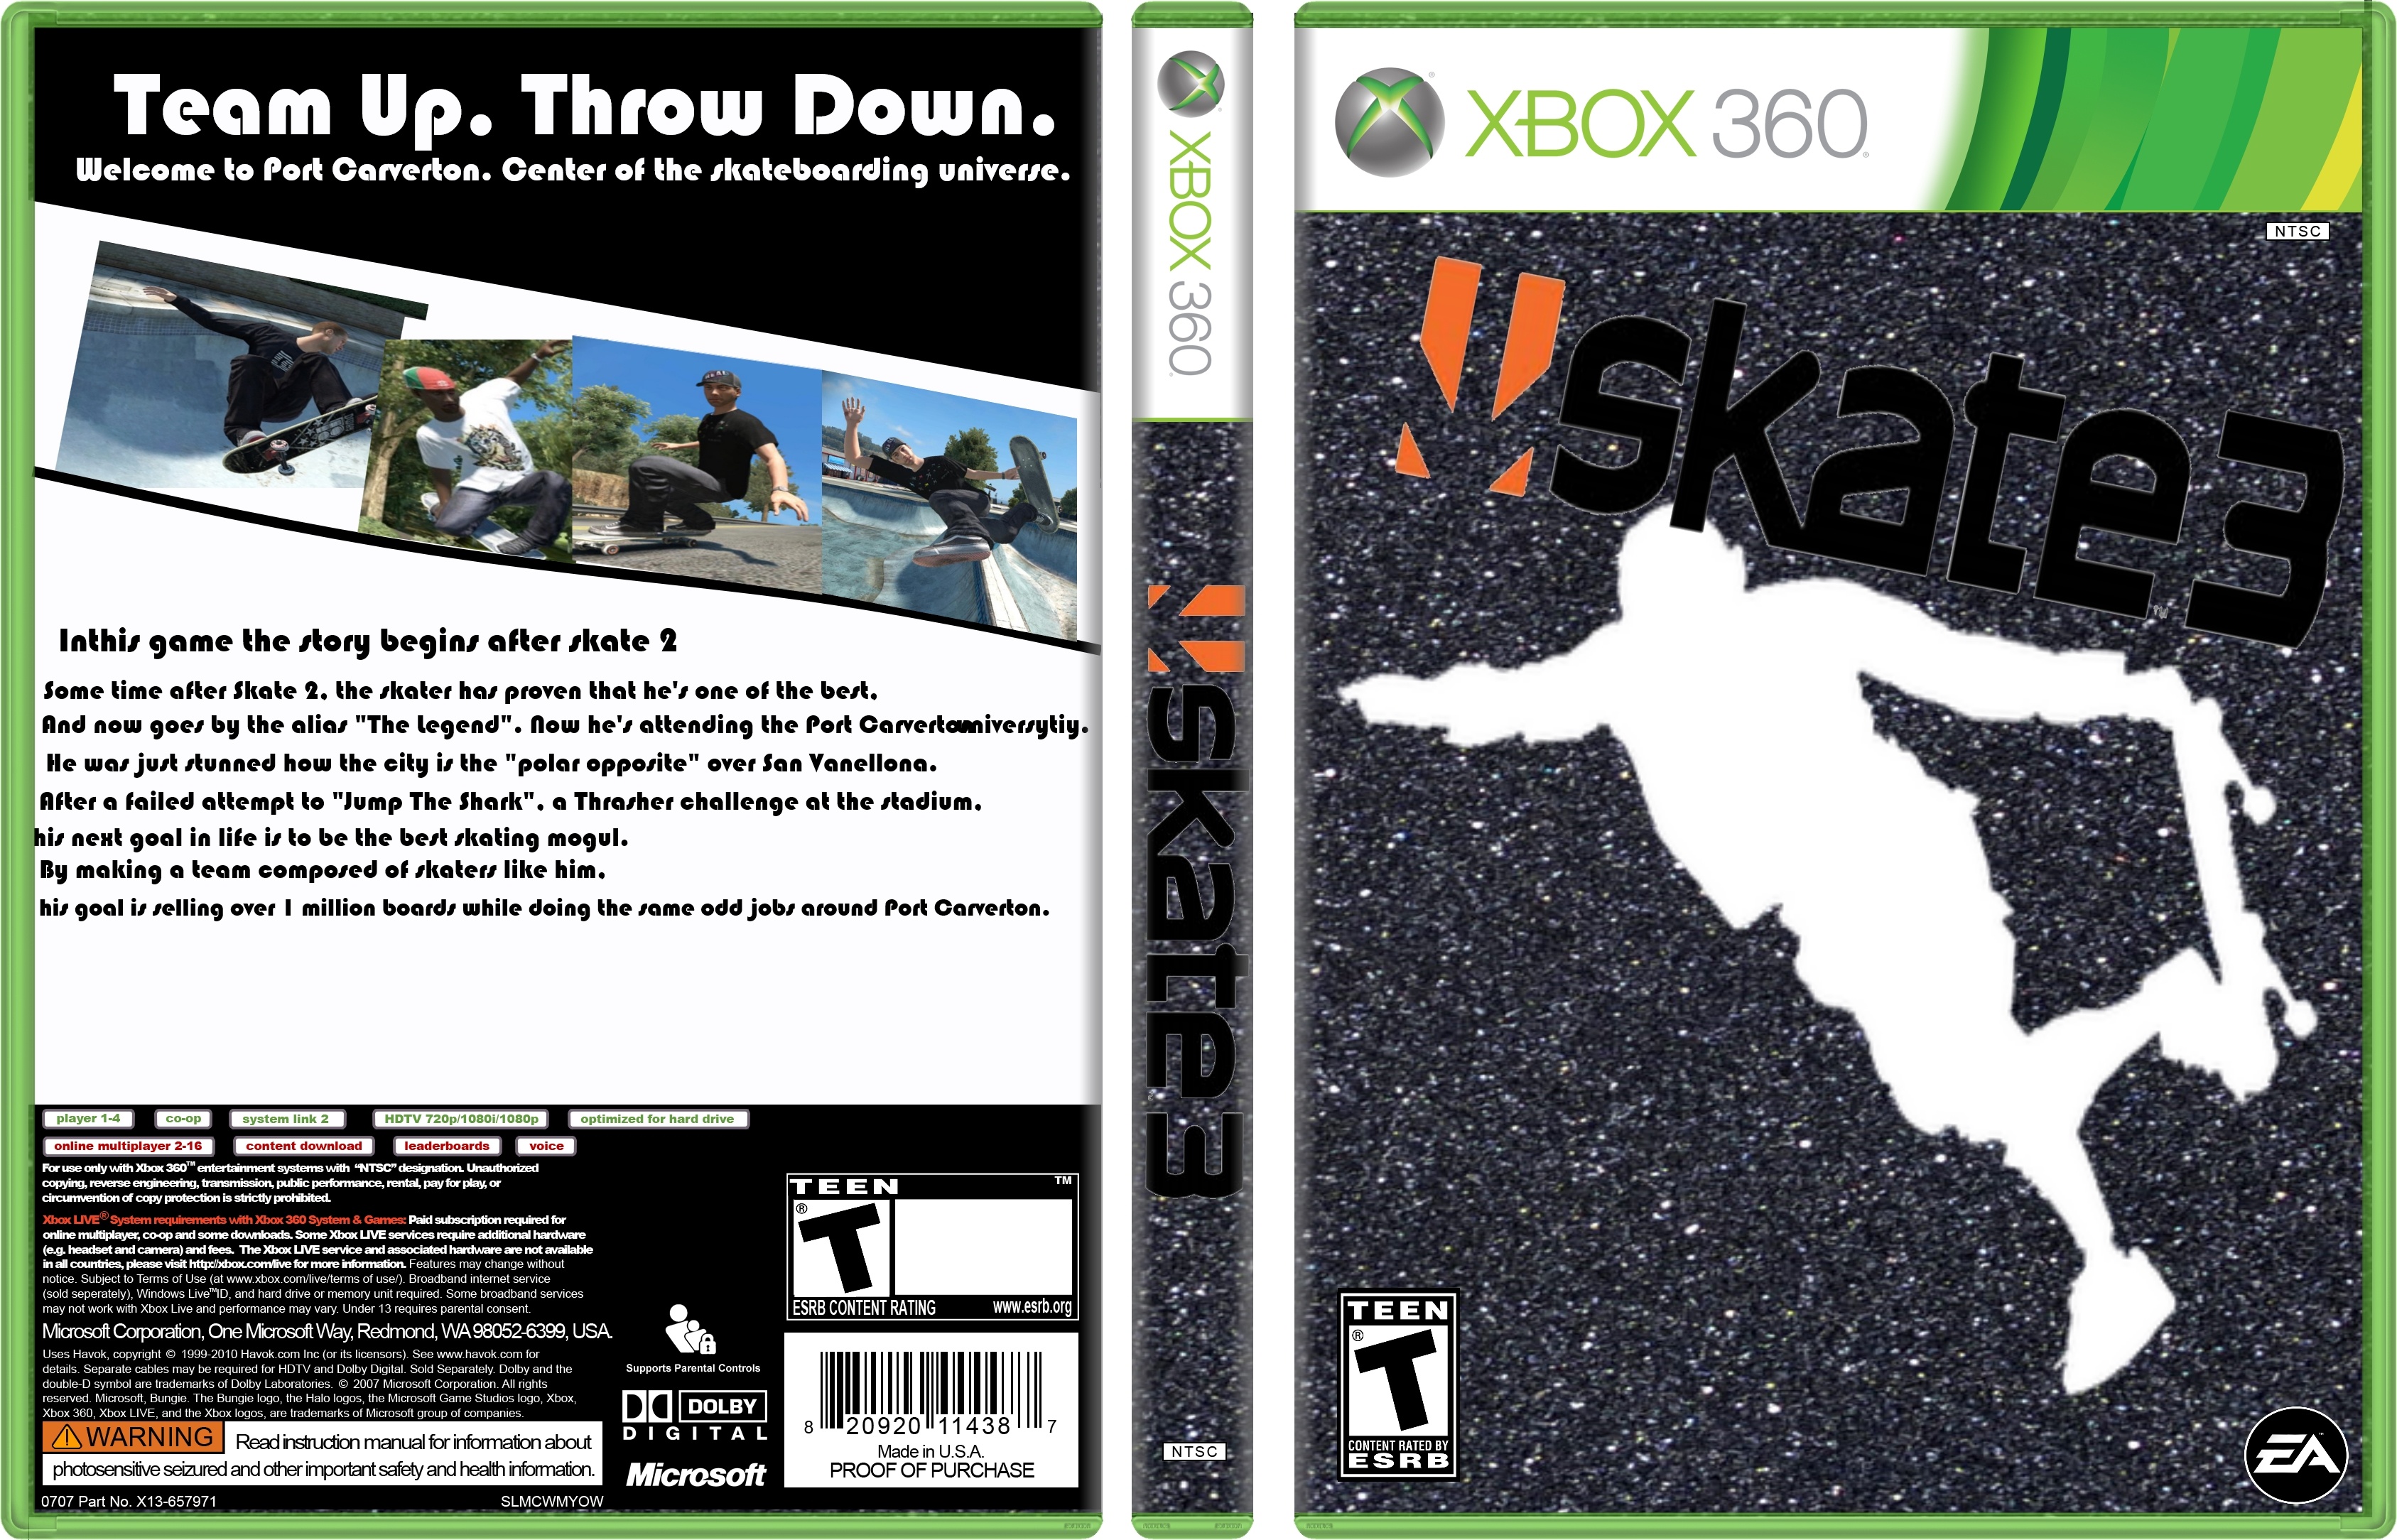 Skate 3 box cover